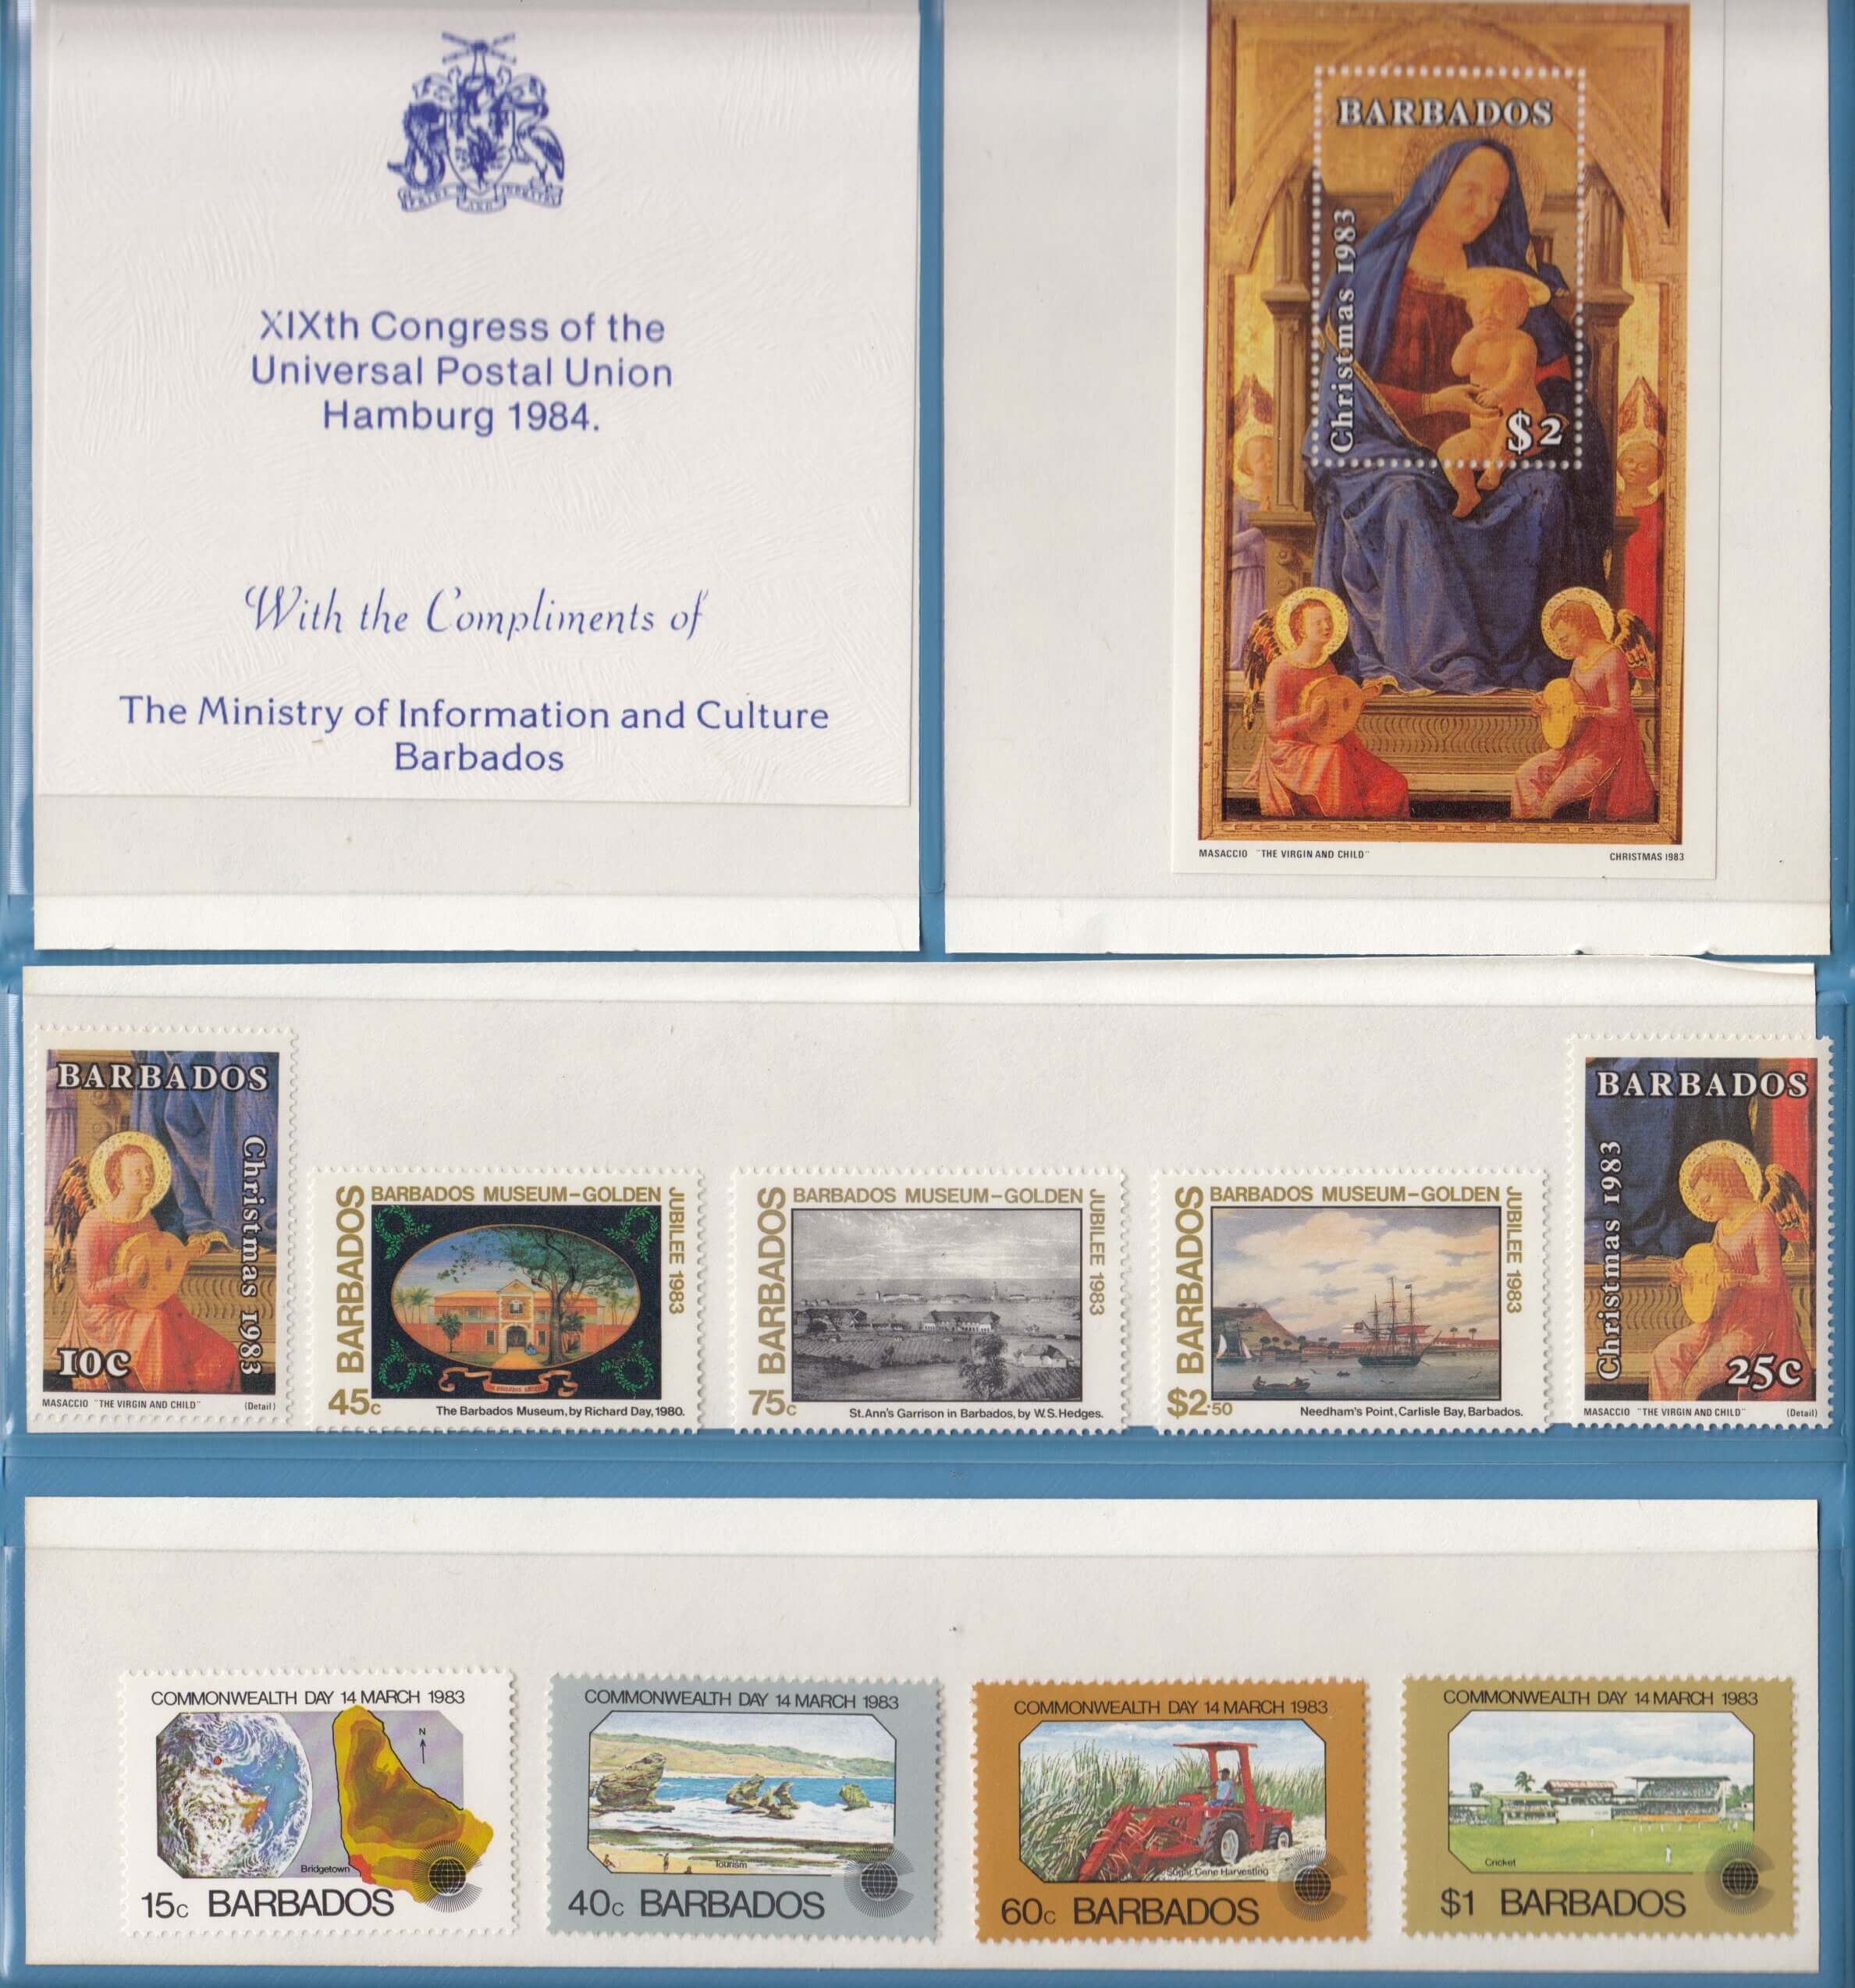 XIXth Congress of the Universal Postal Union Hamburg 1984 Barbados Stamps folder